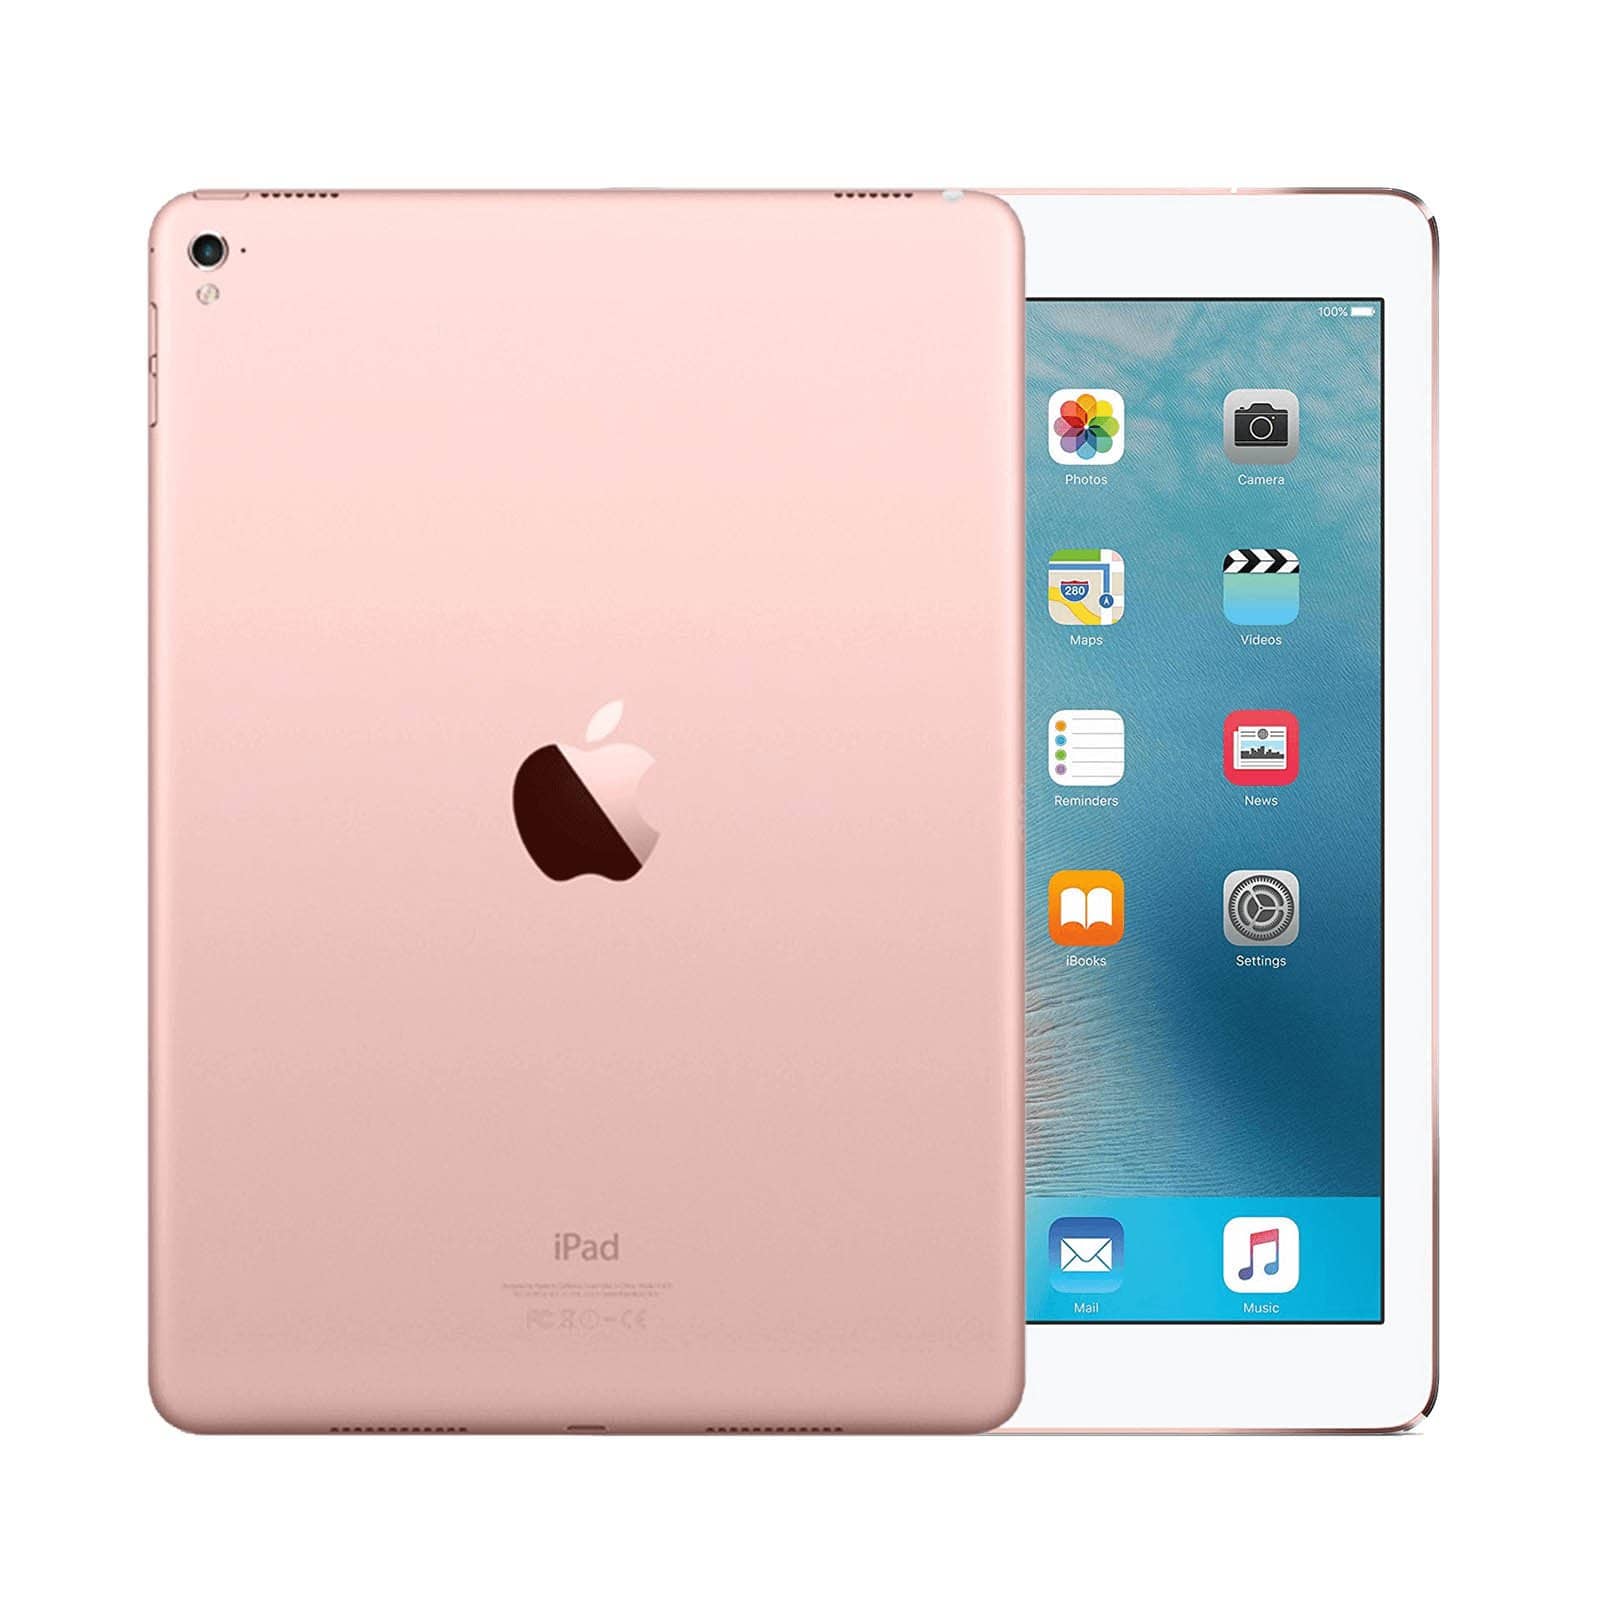 iPad Pro 9.7 Inch 128GB Rose Gold Pristine - WiFi 128GB Rose Gold Pristine